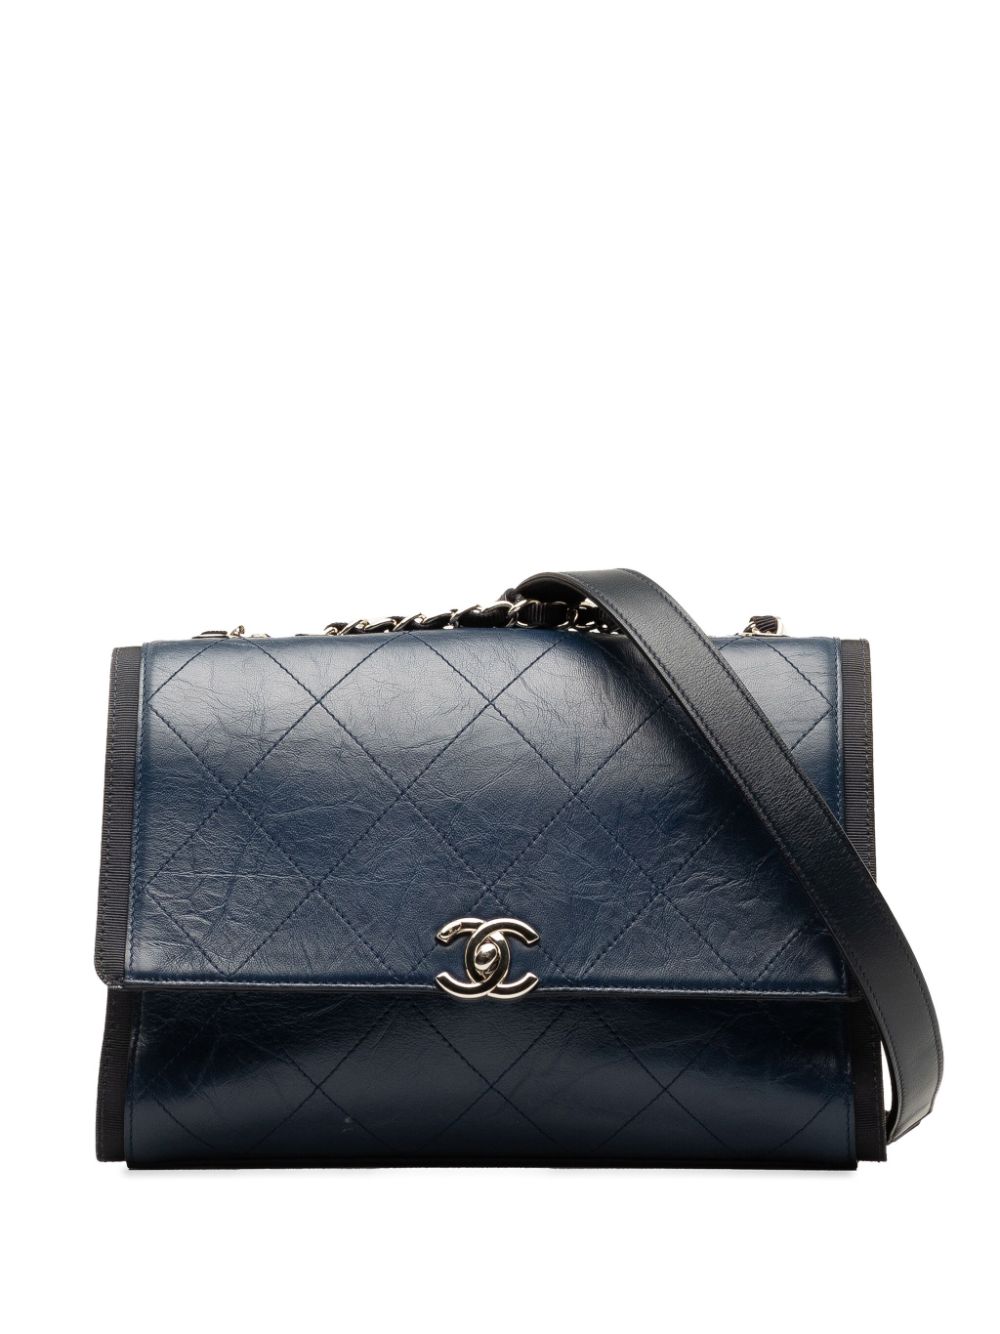 Pre-owned Chanel 2018 Cc Aged Calfskin Flap Shoulder Bag In Blue